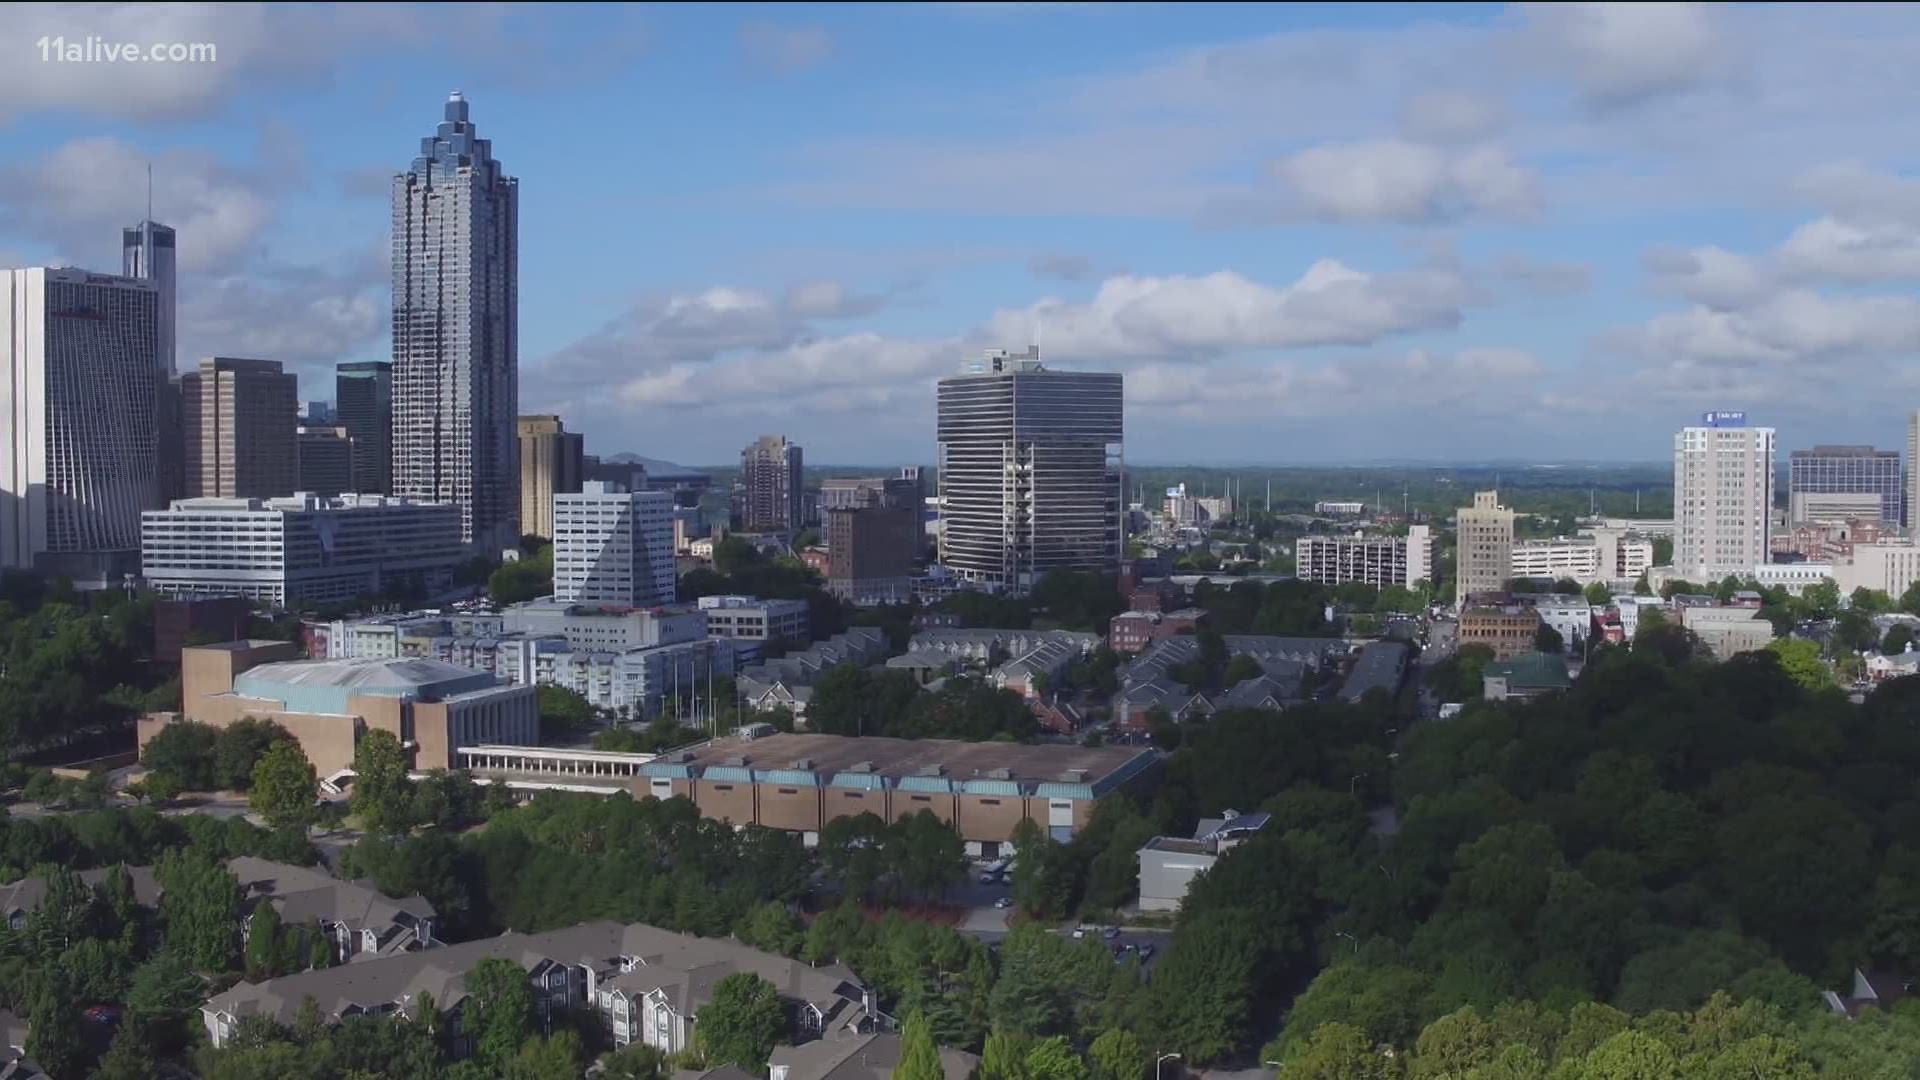 The housing market is booming across metro Atlanta